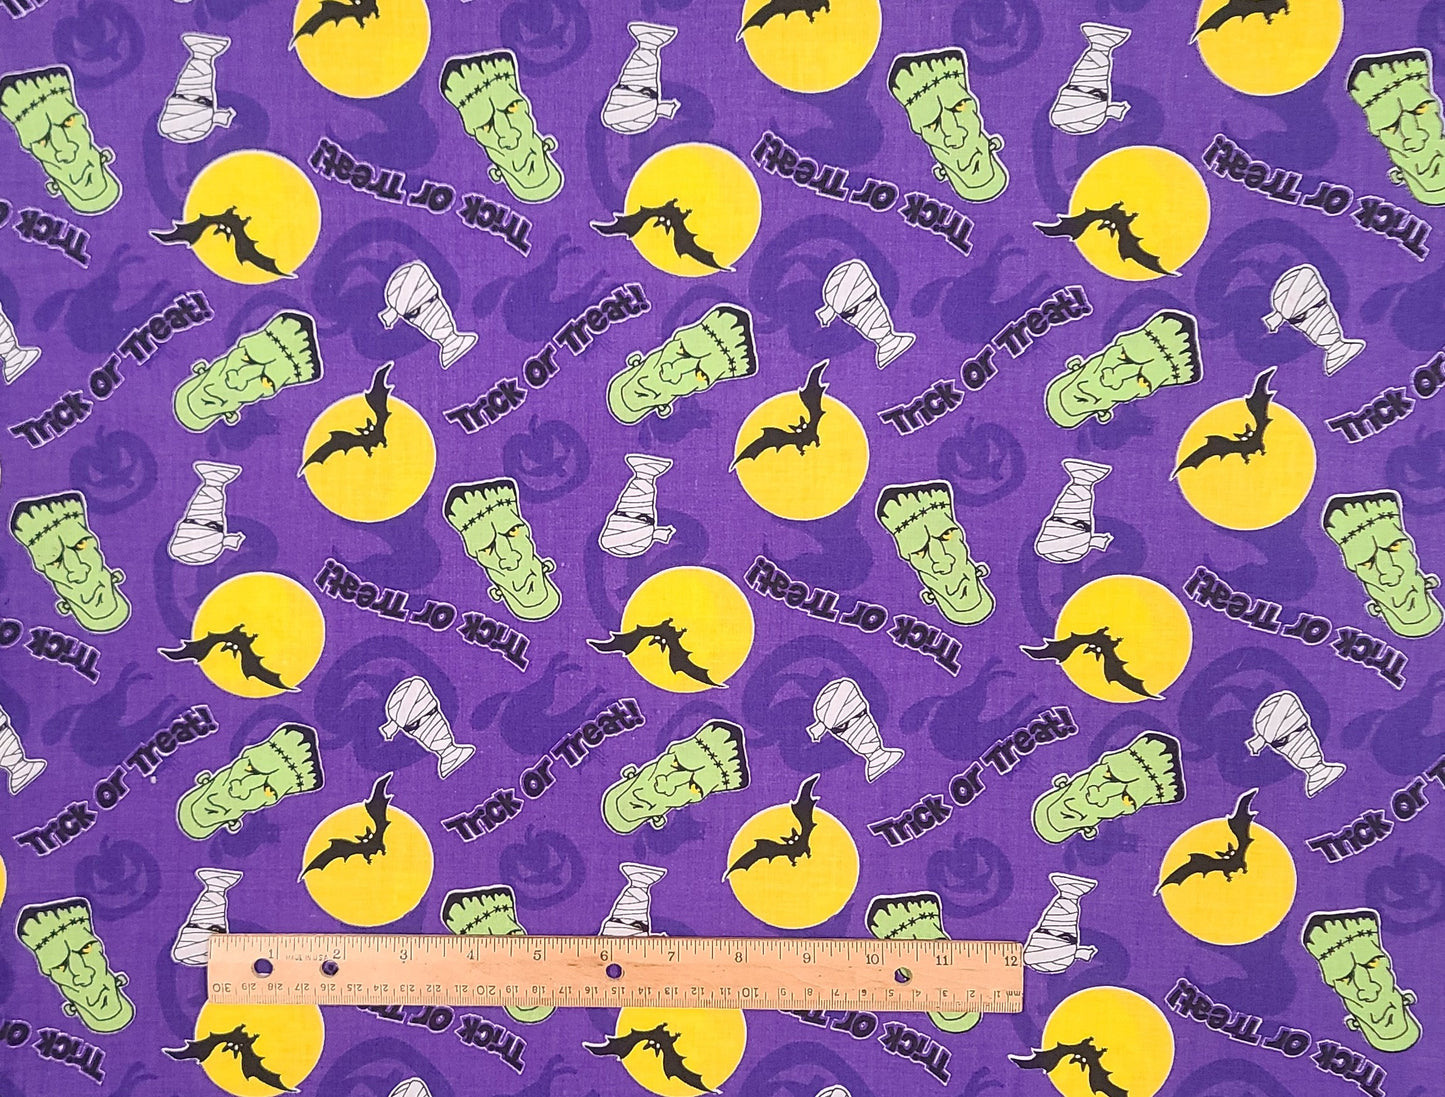 Purple Fabric/Purple Silhouette Cat, Jack-O-Lantern/Bright Yellow Full Moon with Black Bat/Green Frankenstein Face/Mummy Face/Trick or Treat